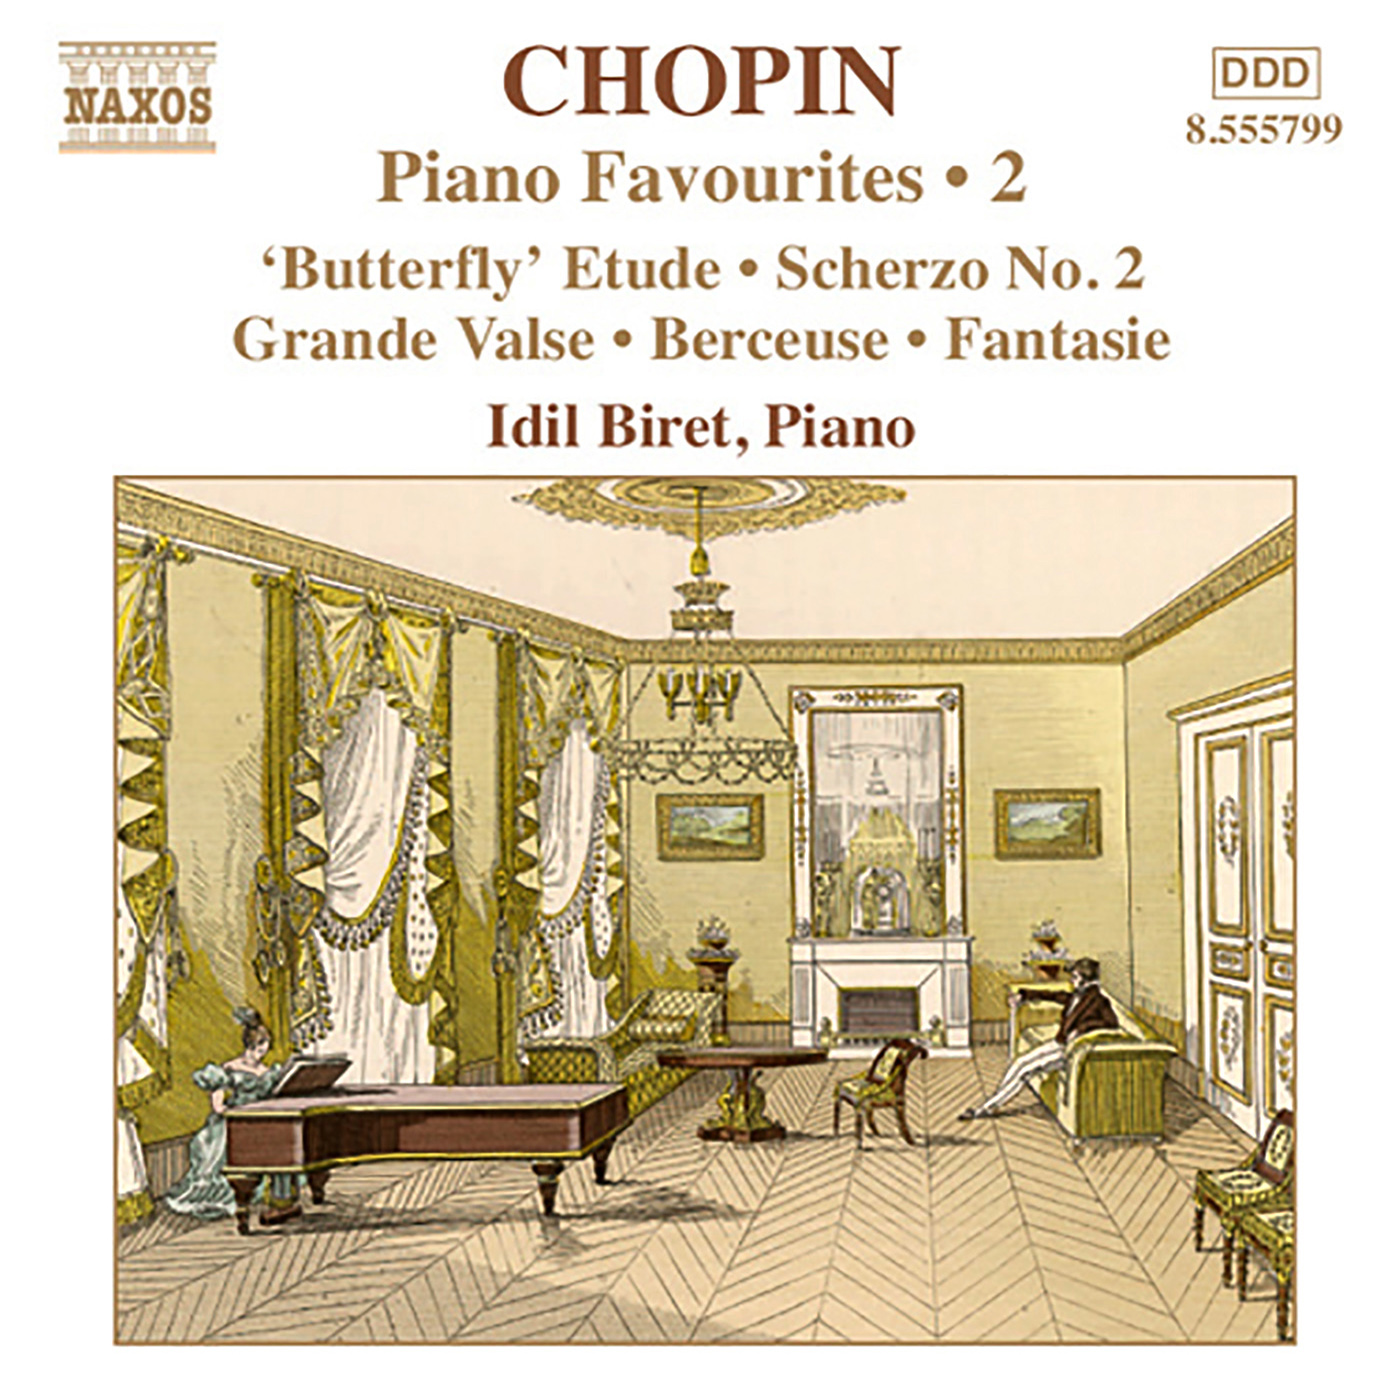 CHOPIN: Piano Favourites, Vol. 2